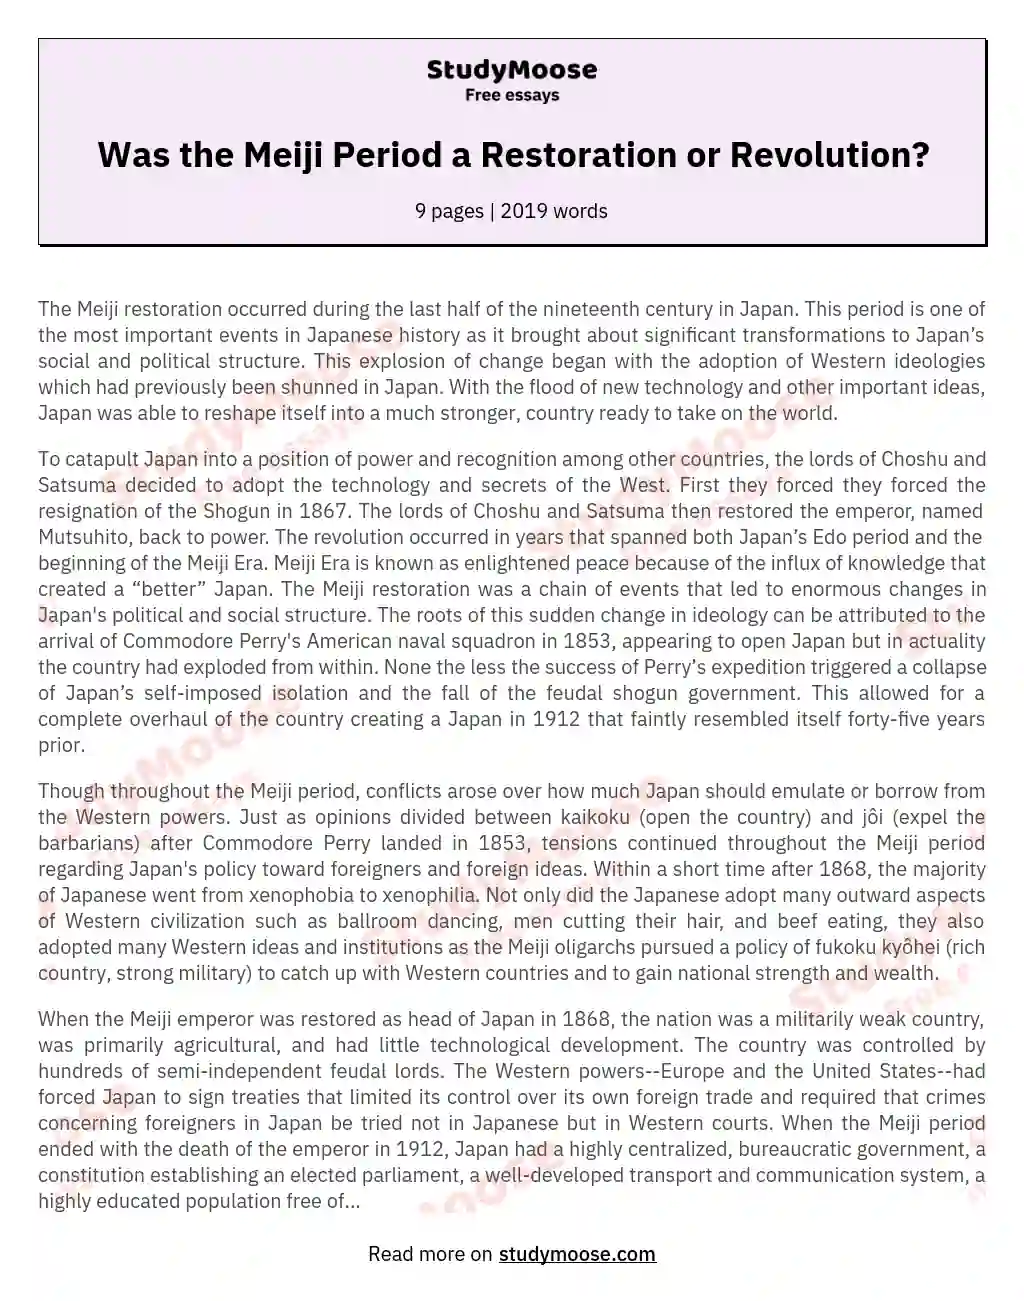 Was the Meiji Period a Restoration or Revolution? essay